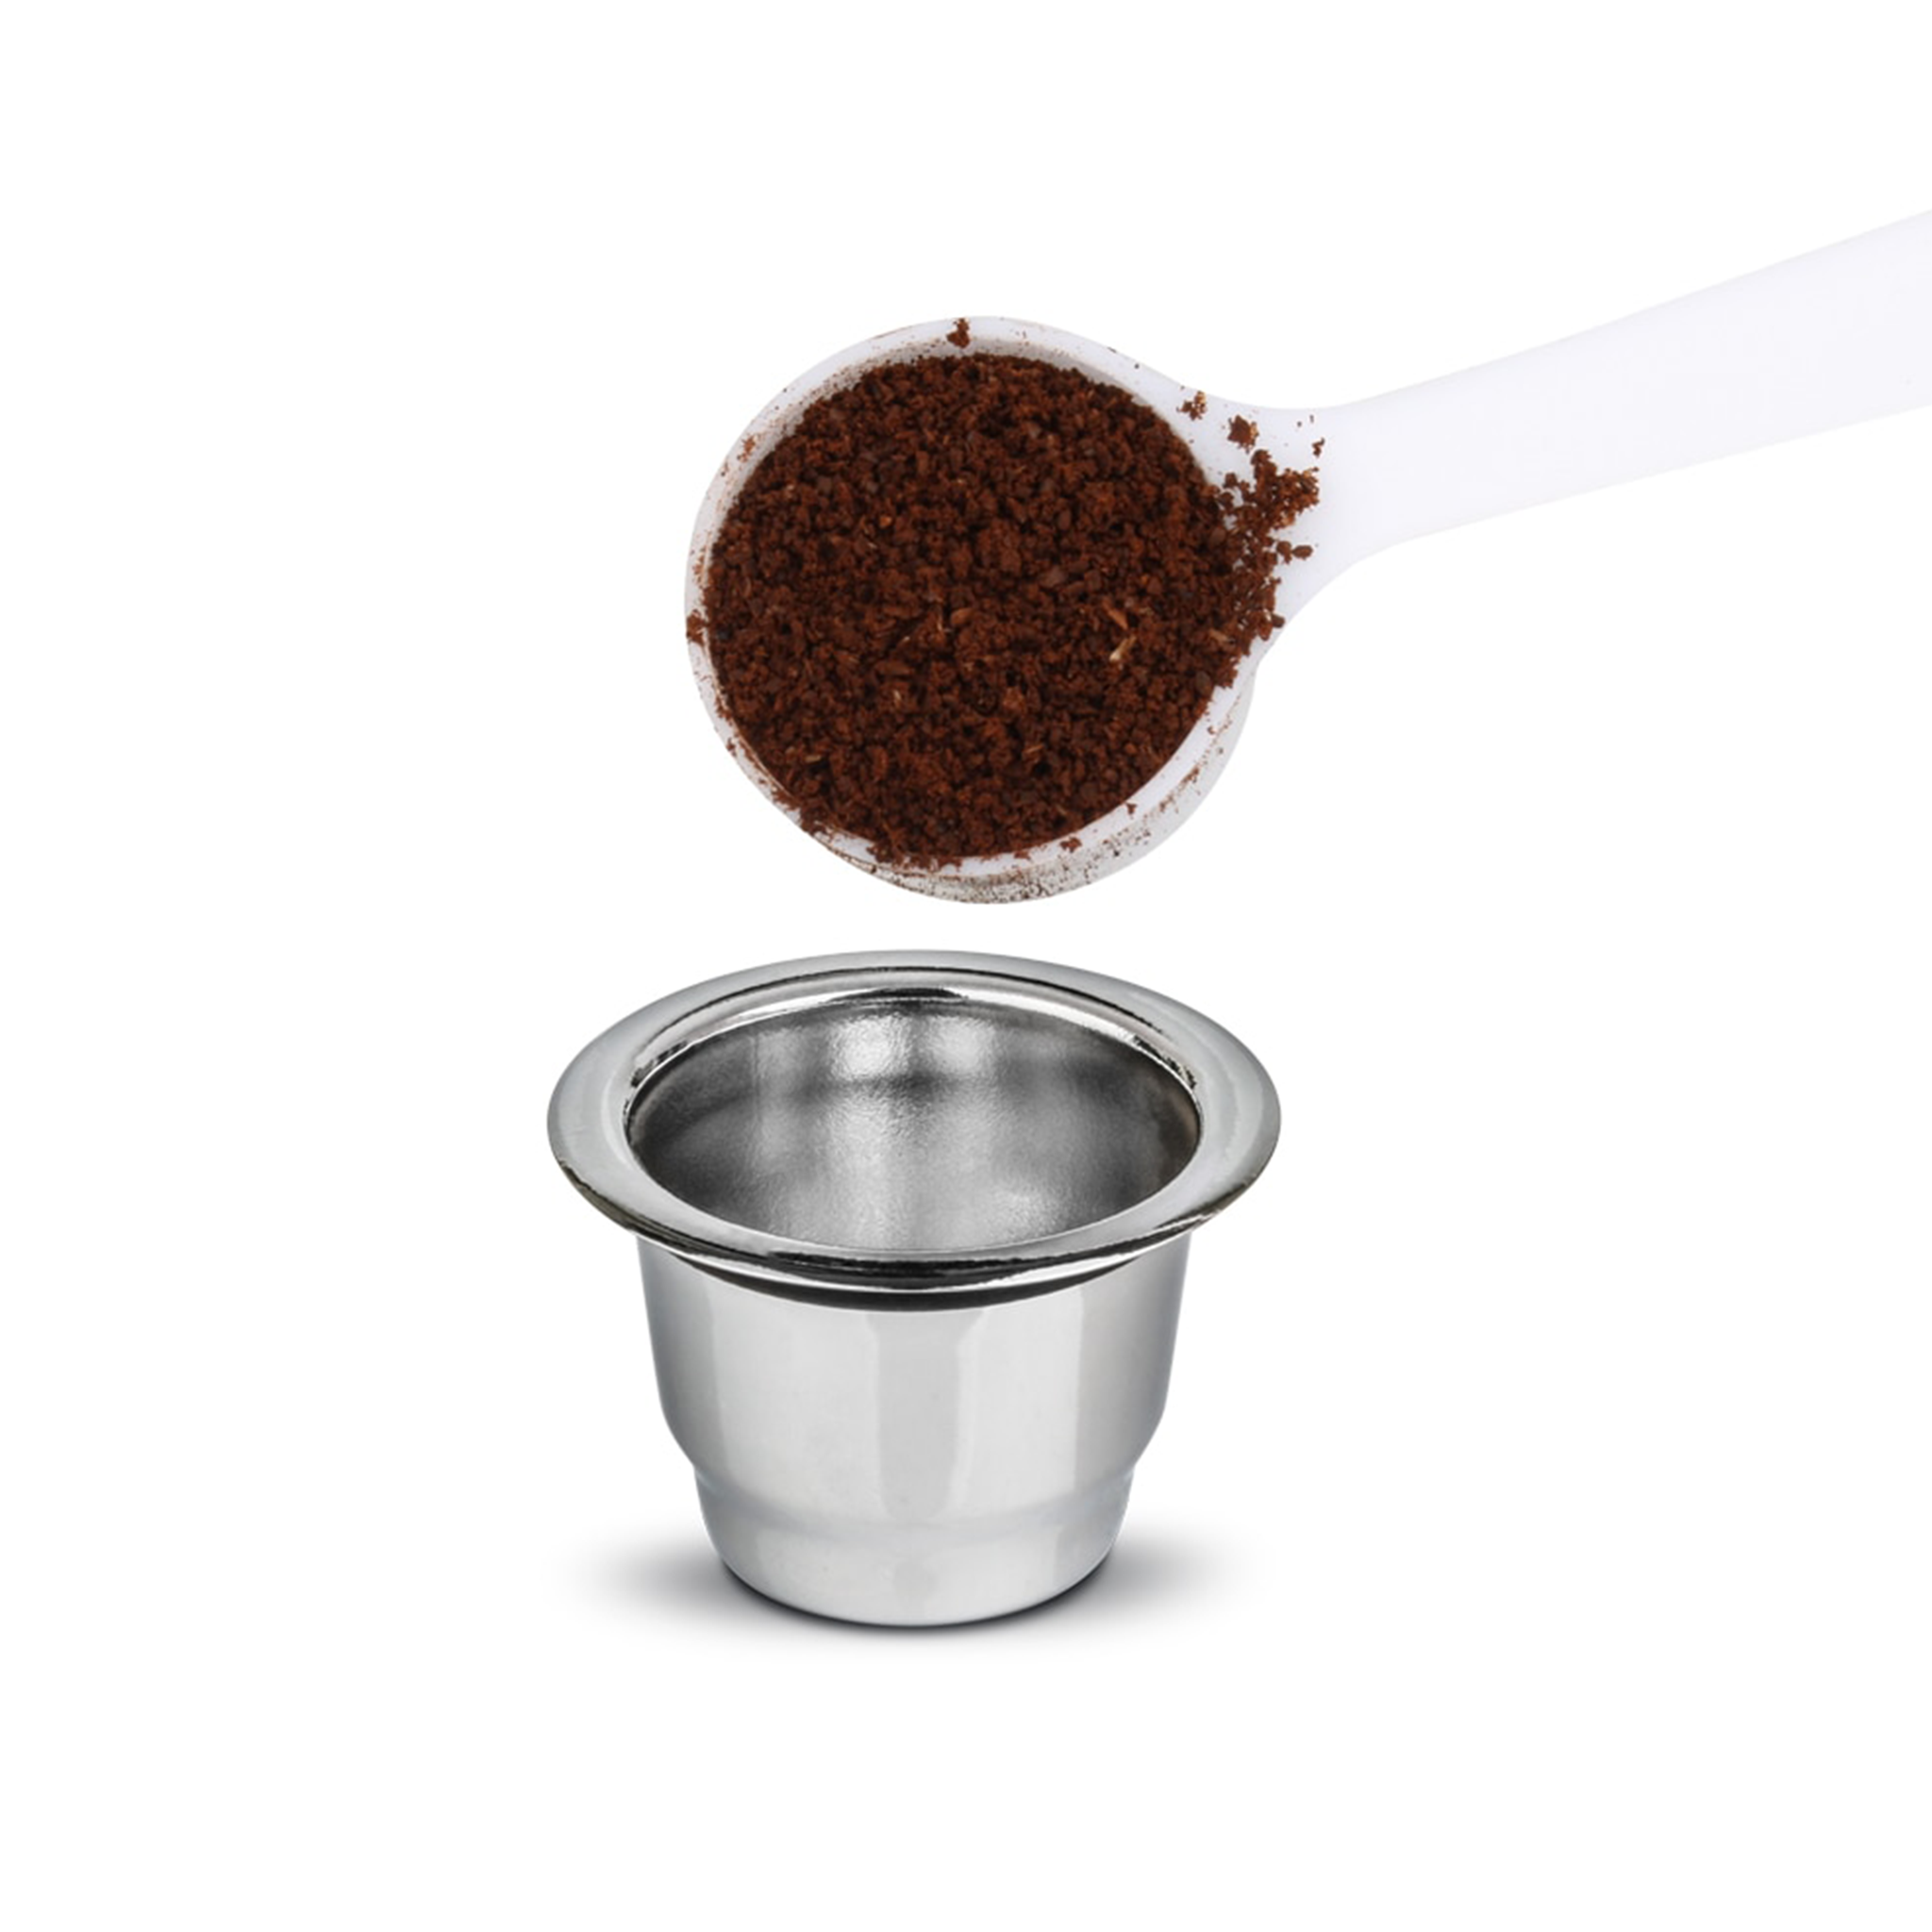 Capsule Nespresso réutilisable en inox